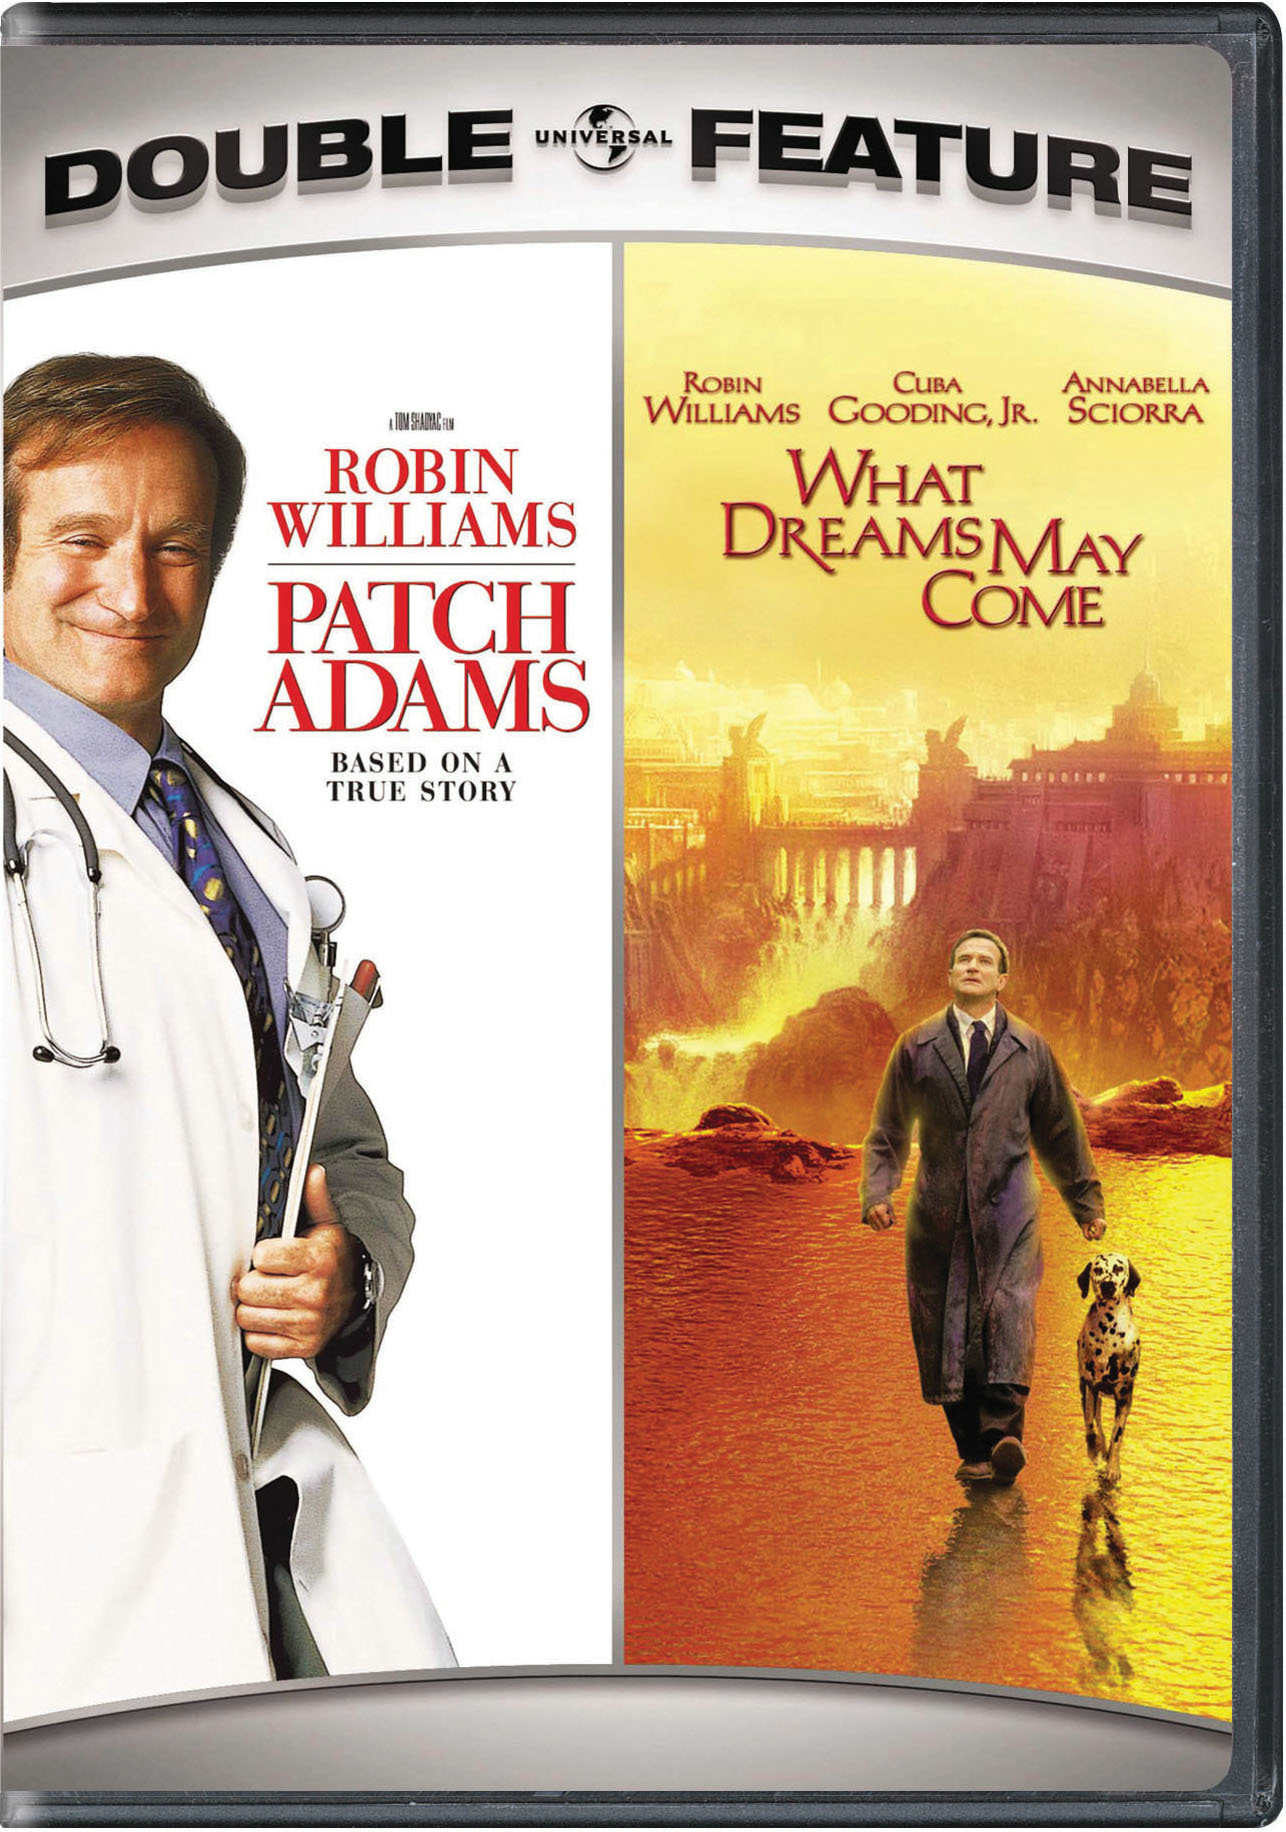  What Dreams May Come : Robin Williams, Cuba Gooding Jr